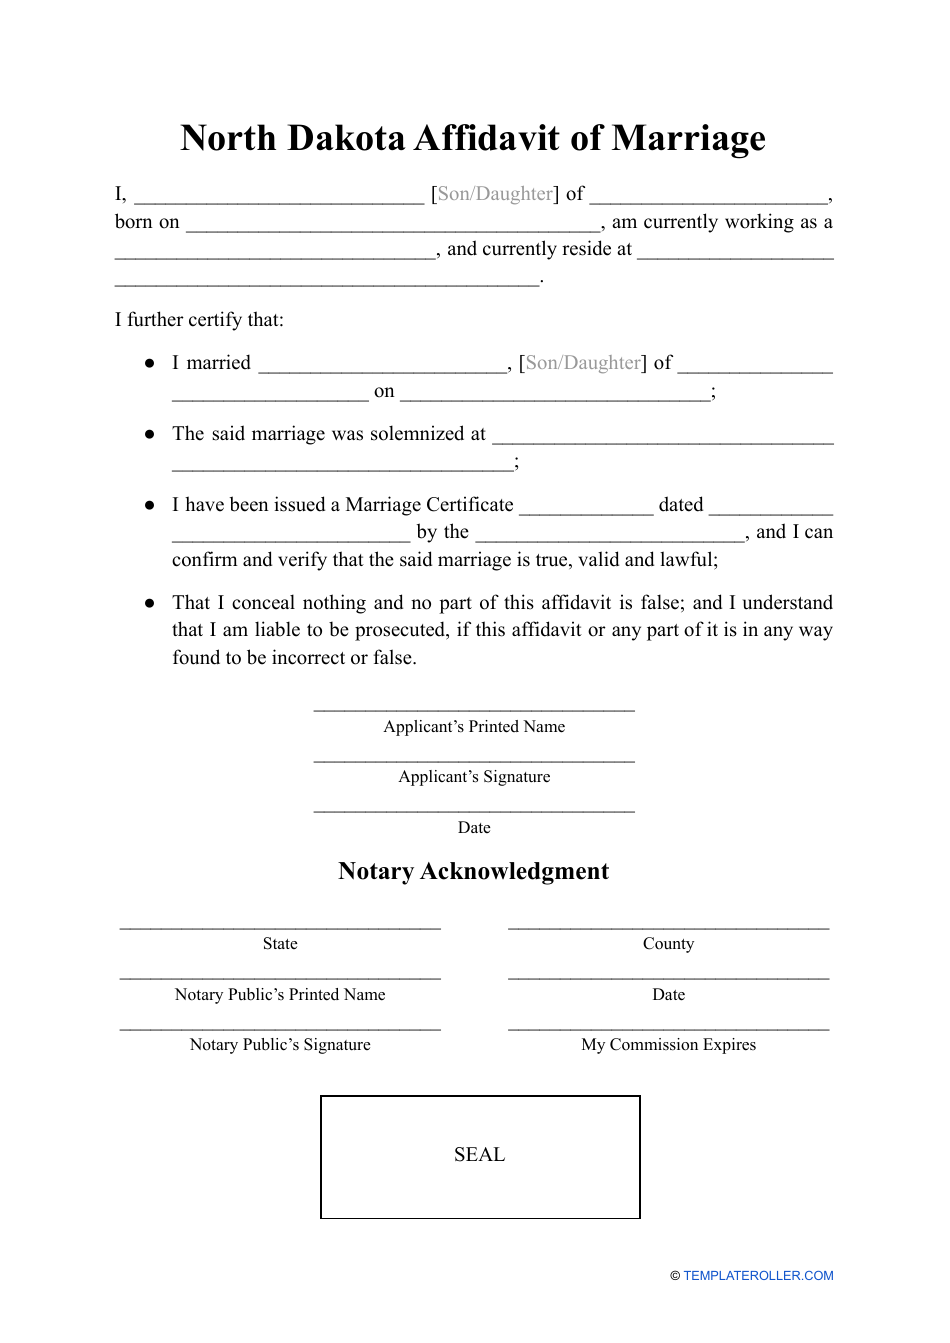 Affidavit of Marriage - North Dakota, Page 1